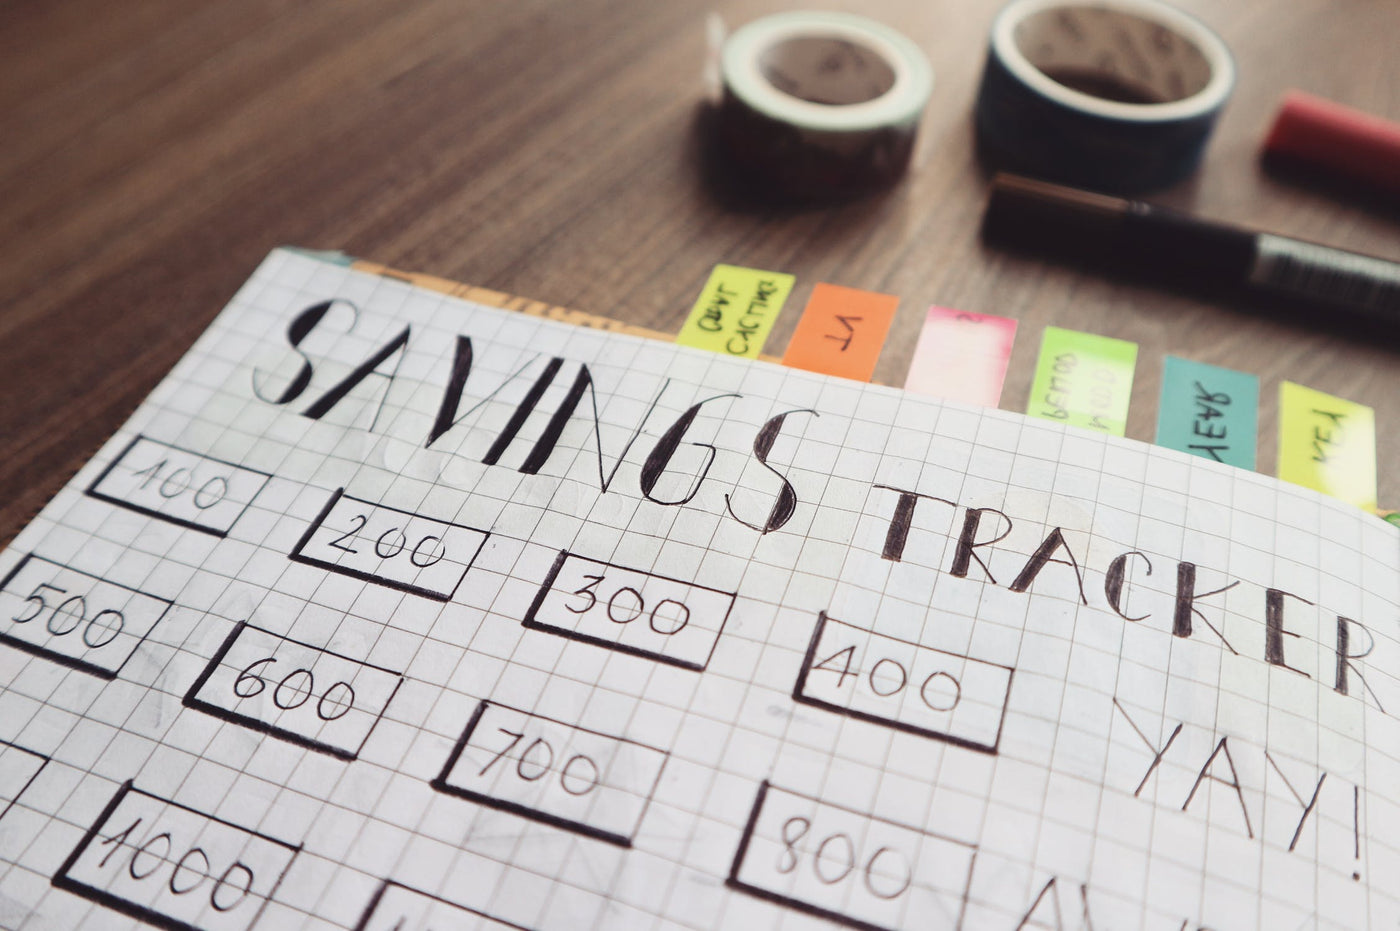 Savings Tracker To Help Improve Finances